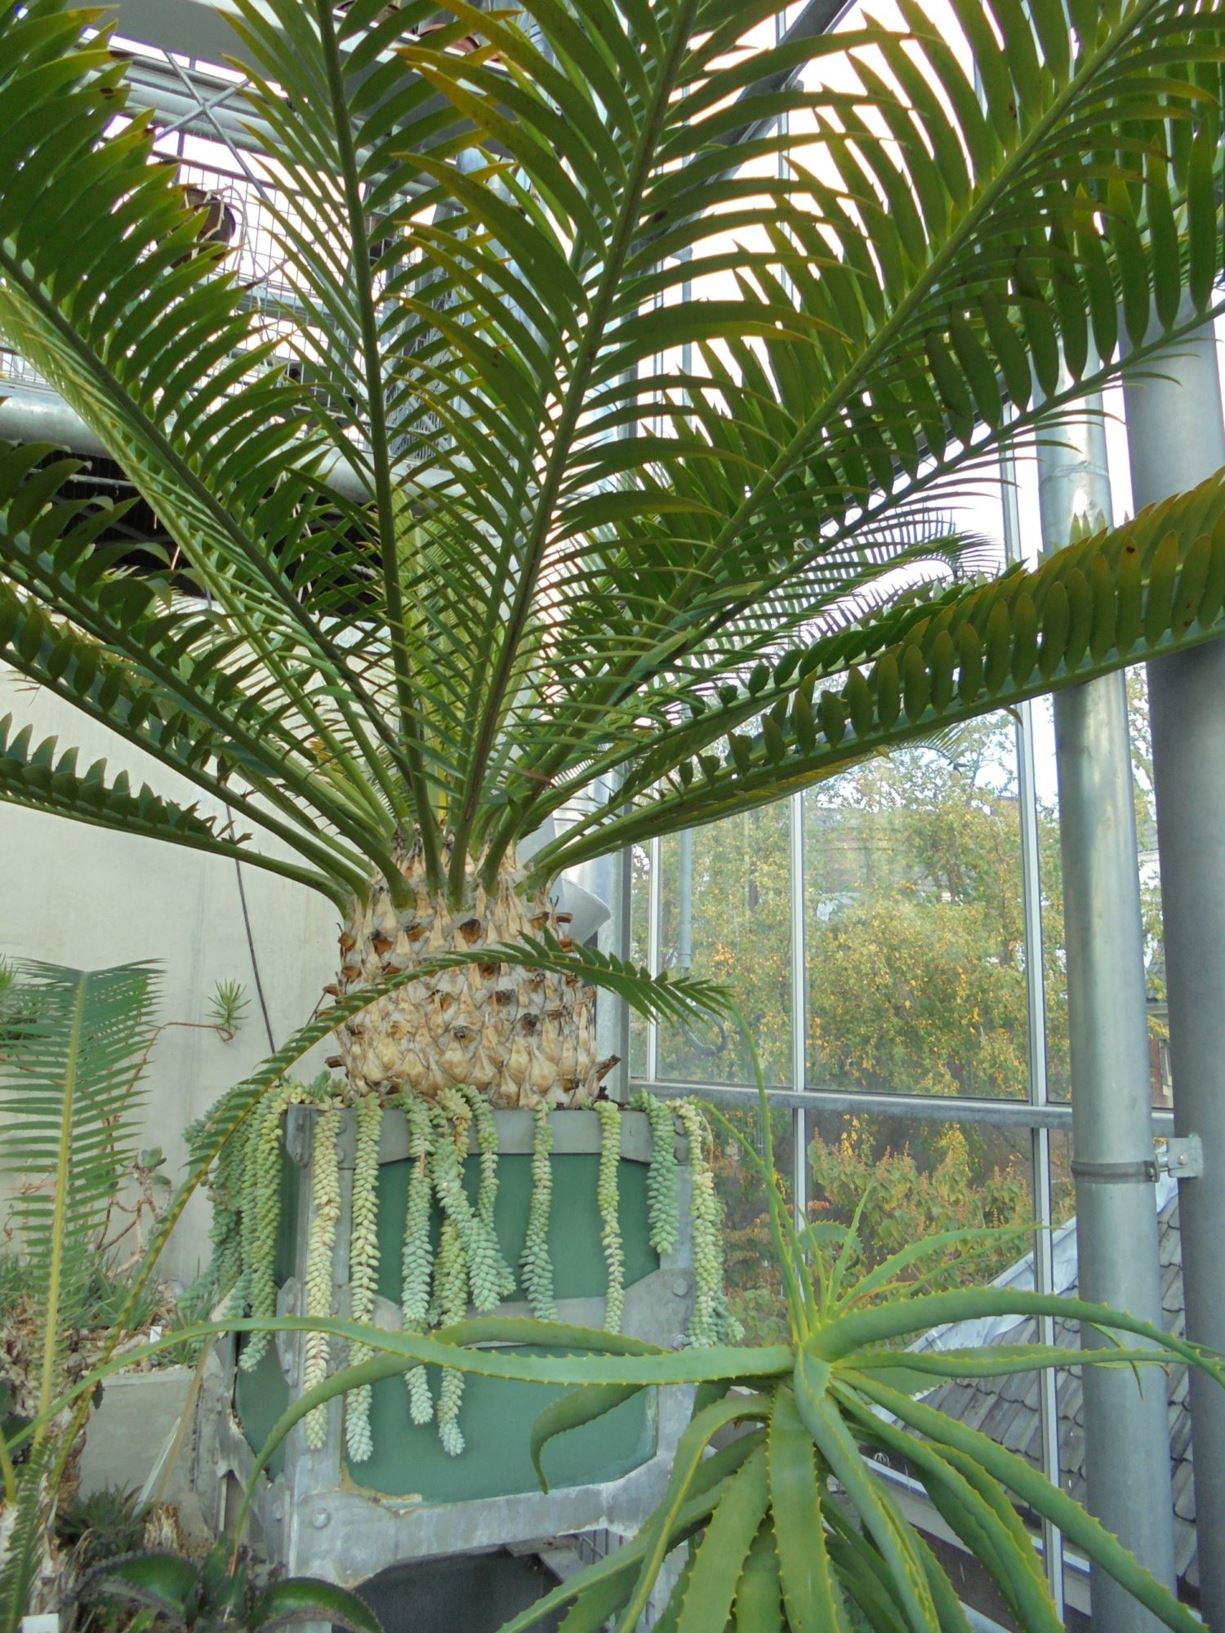 Encephalartos altensteinii - Eastern Cape (giant) cycad, Oos-kaapse broodboom